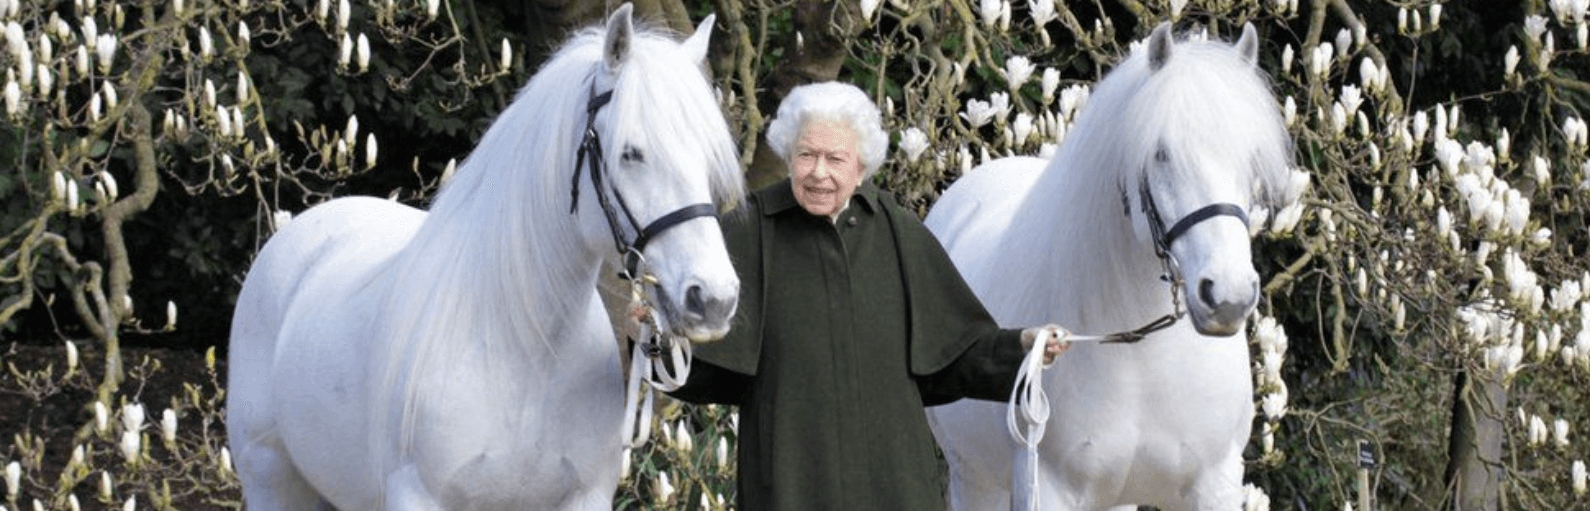 Queen Elizabeth II Marks 96th Birthday in Sandringham